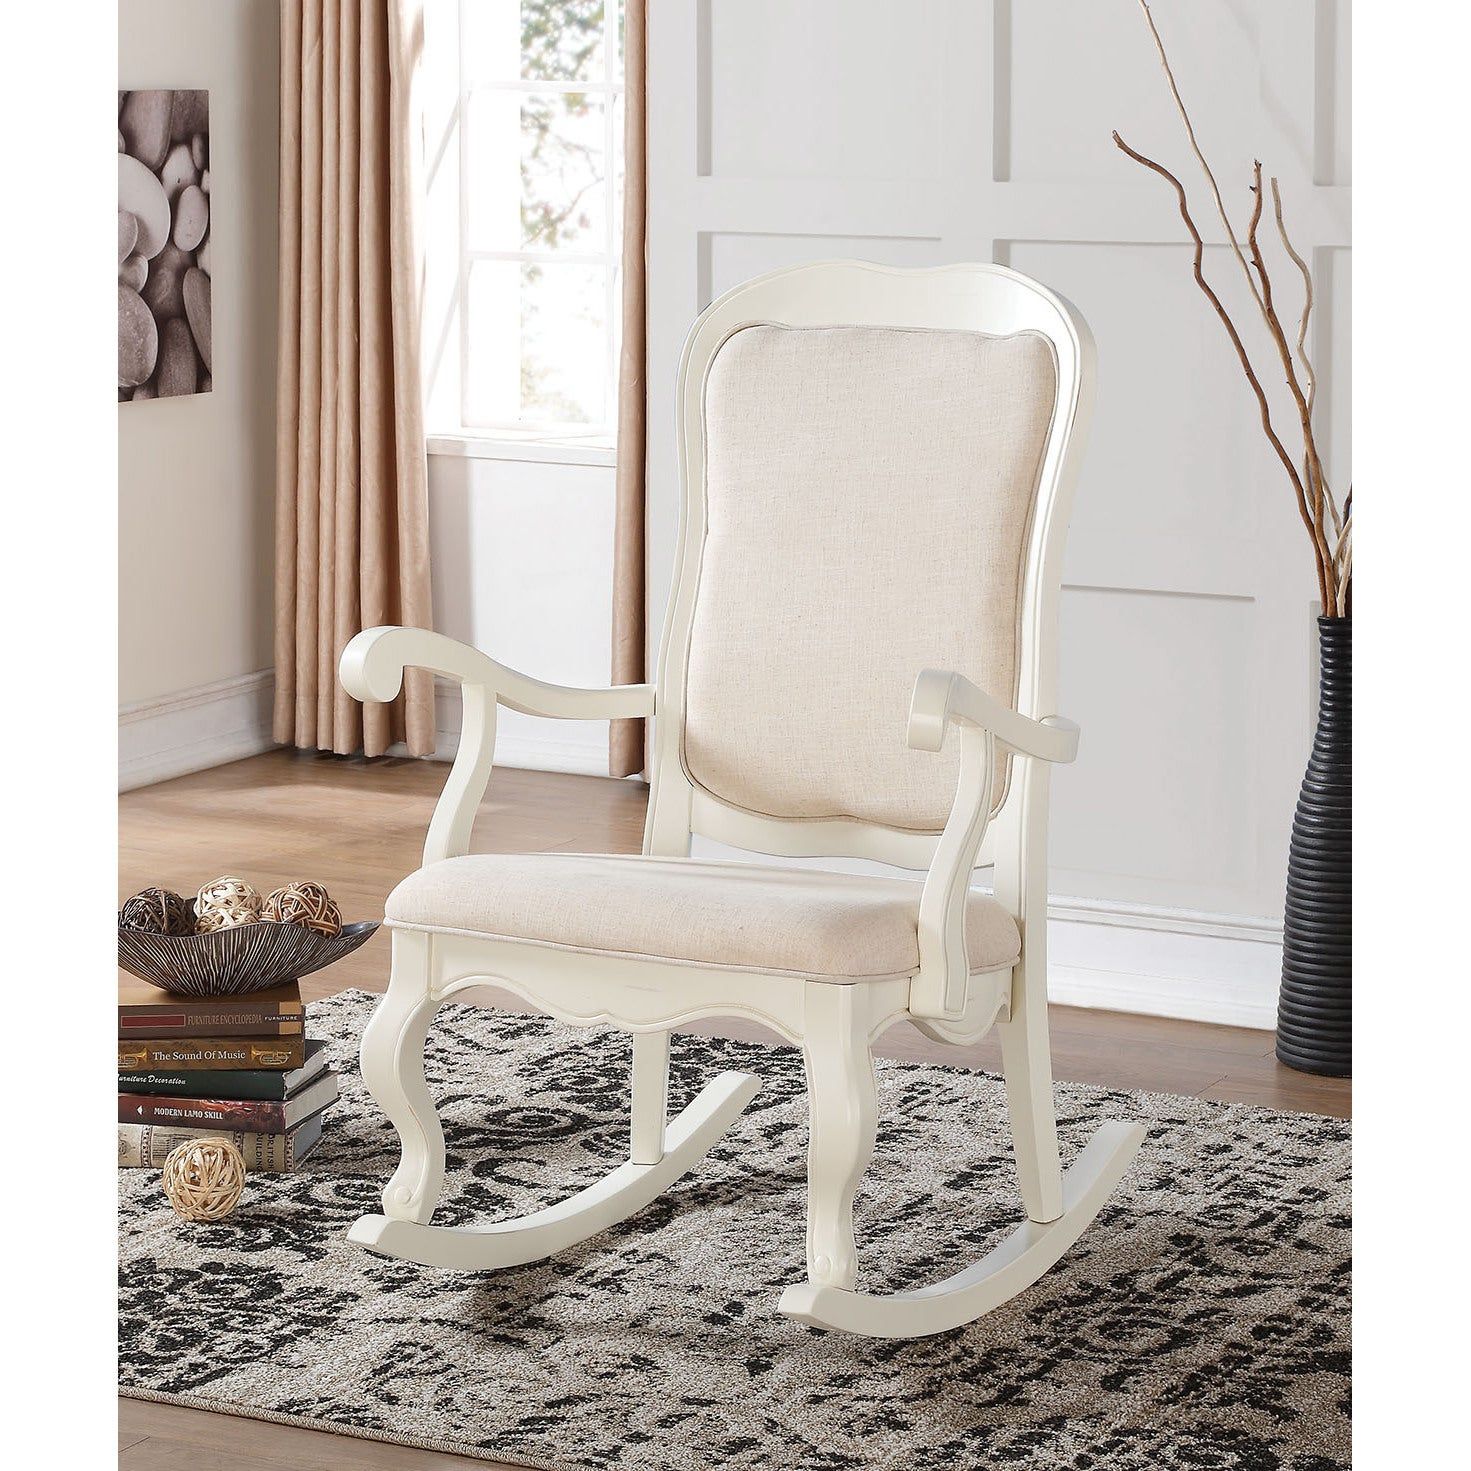 Sharan Antique White Wooden Rocking Chair Throughout White Wood Rocking Chairs (View 6 of 20)